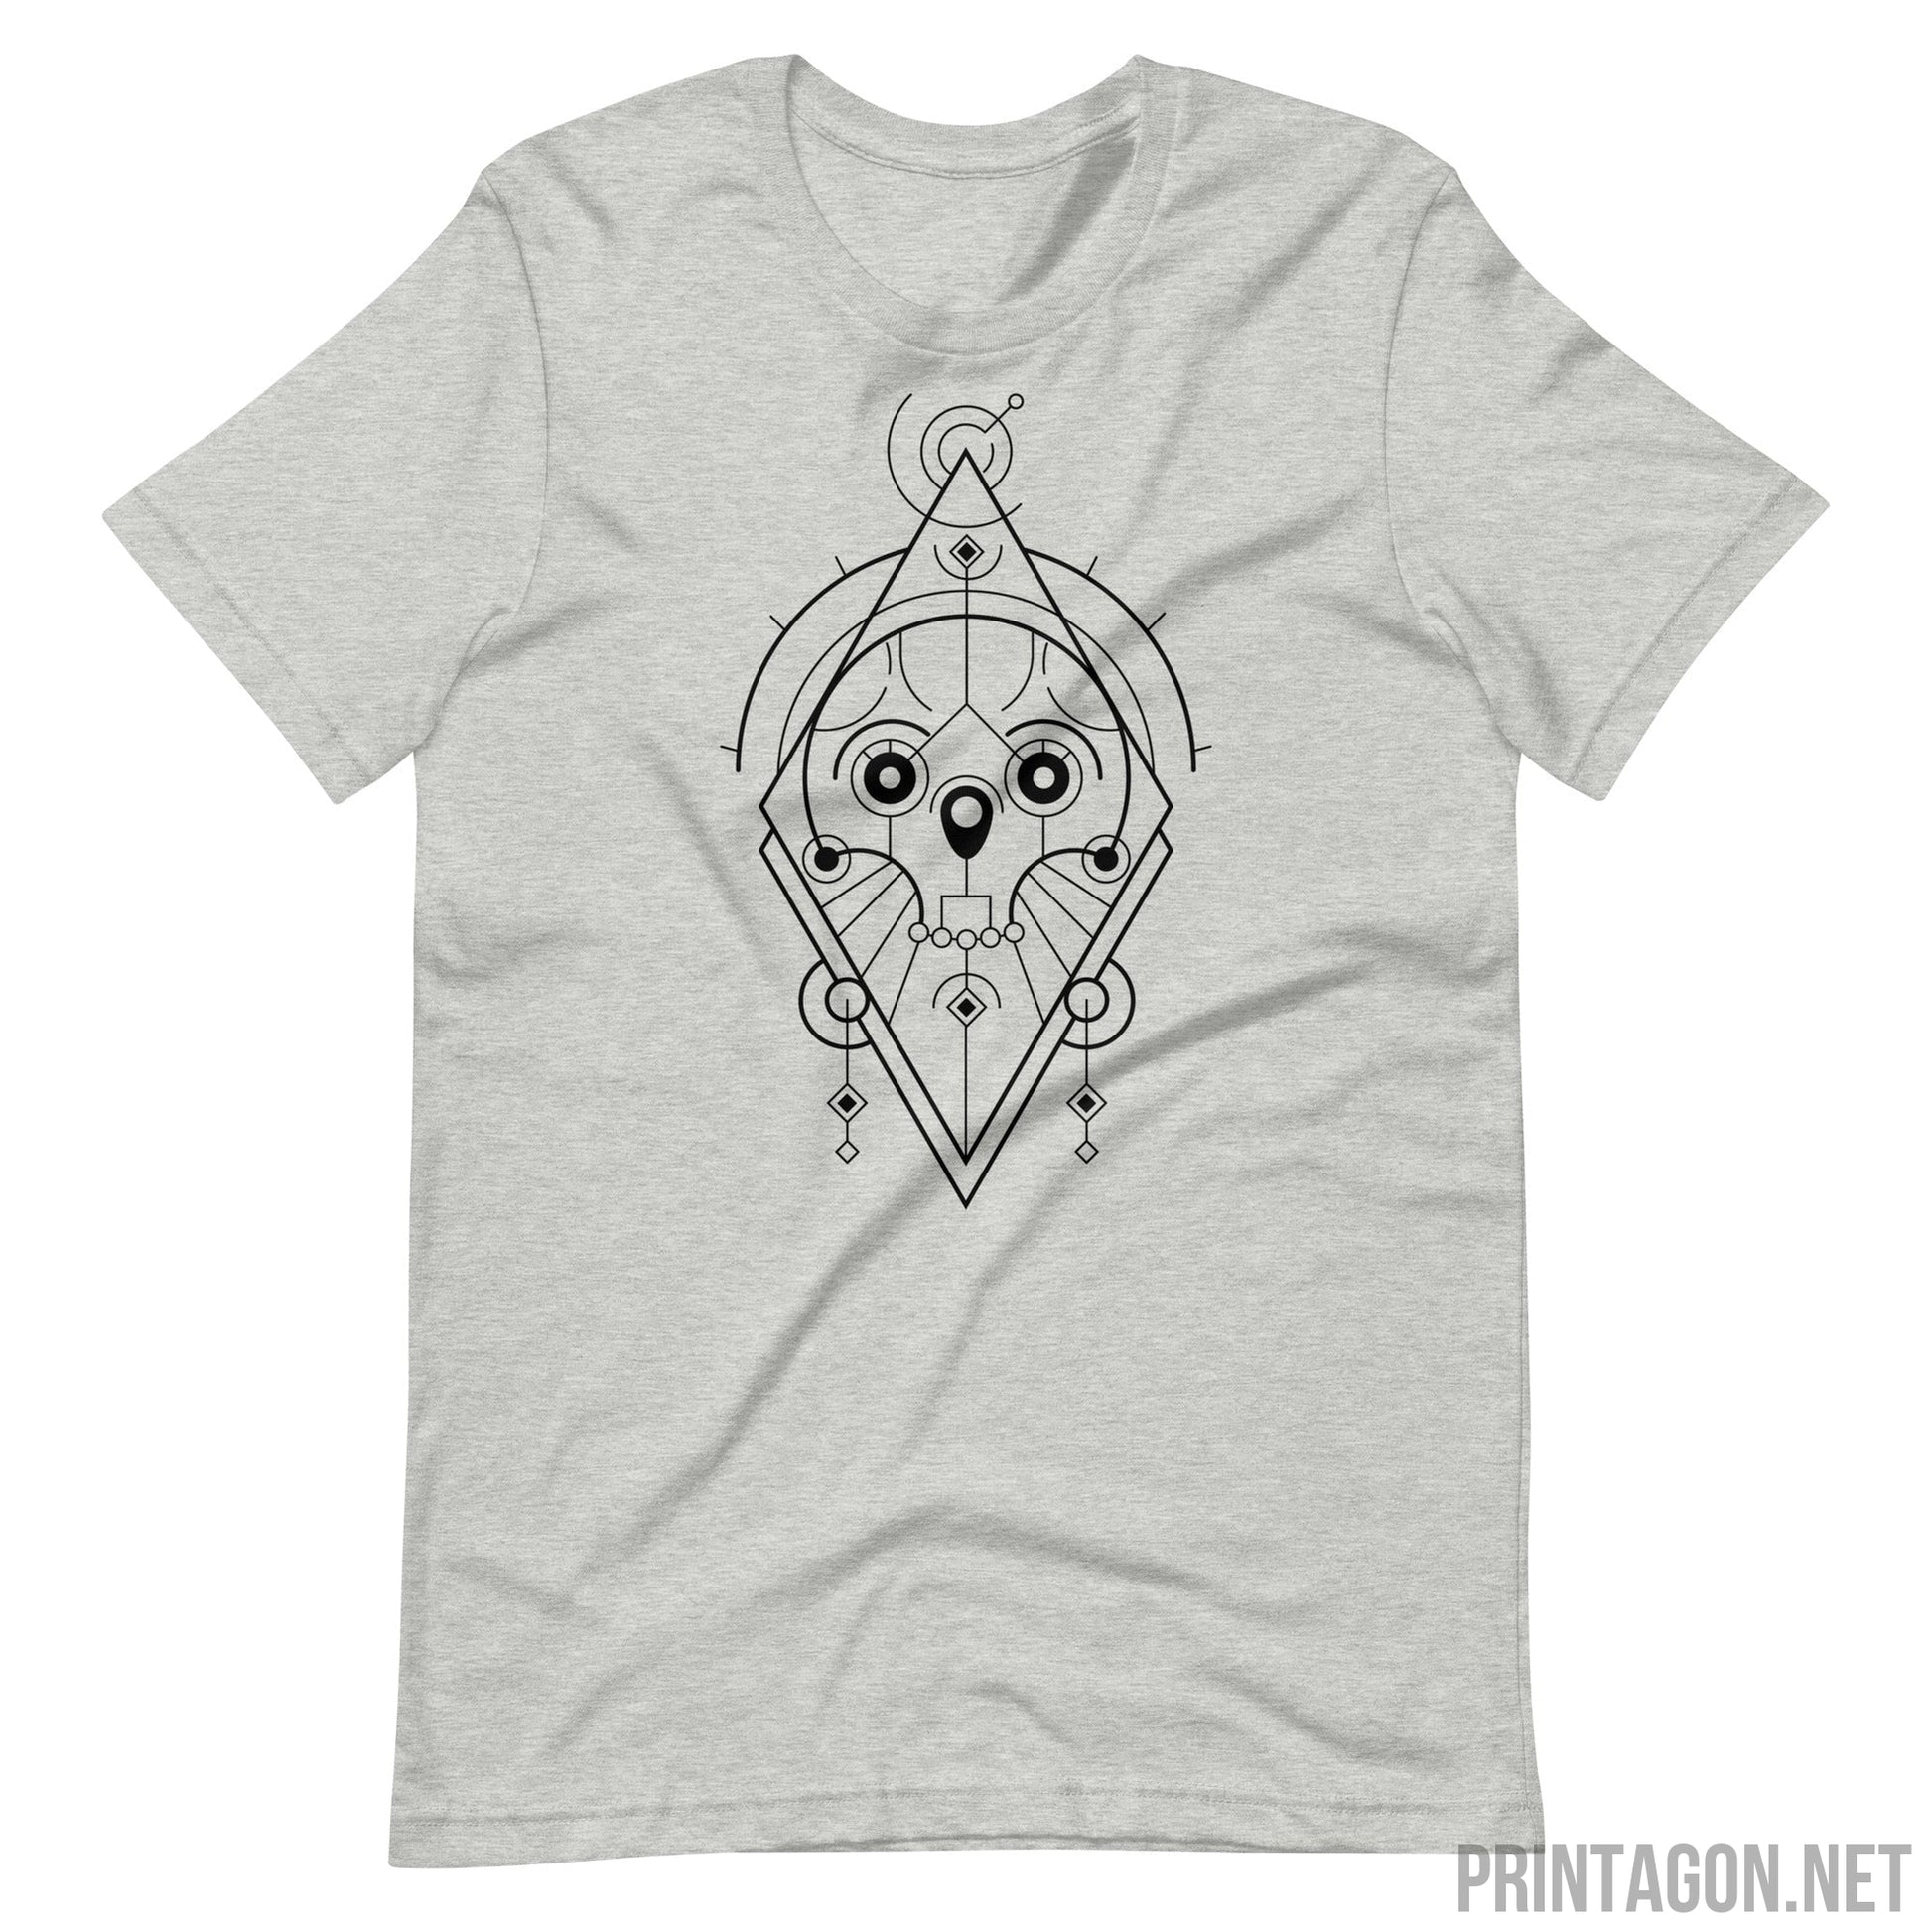 Sacred Geometric Skull - Unisex T-shirt - Athletic Heather / XS Printagon